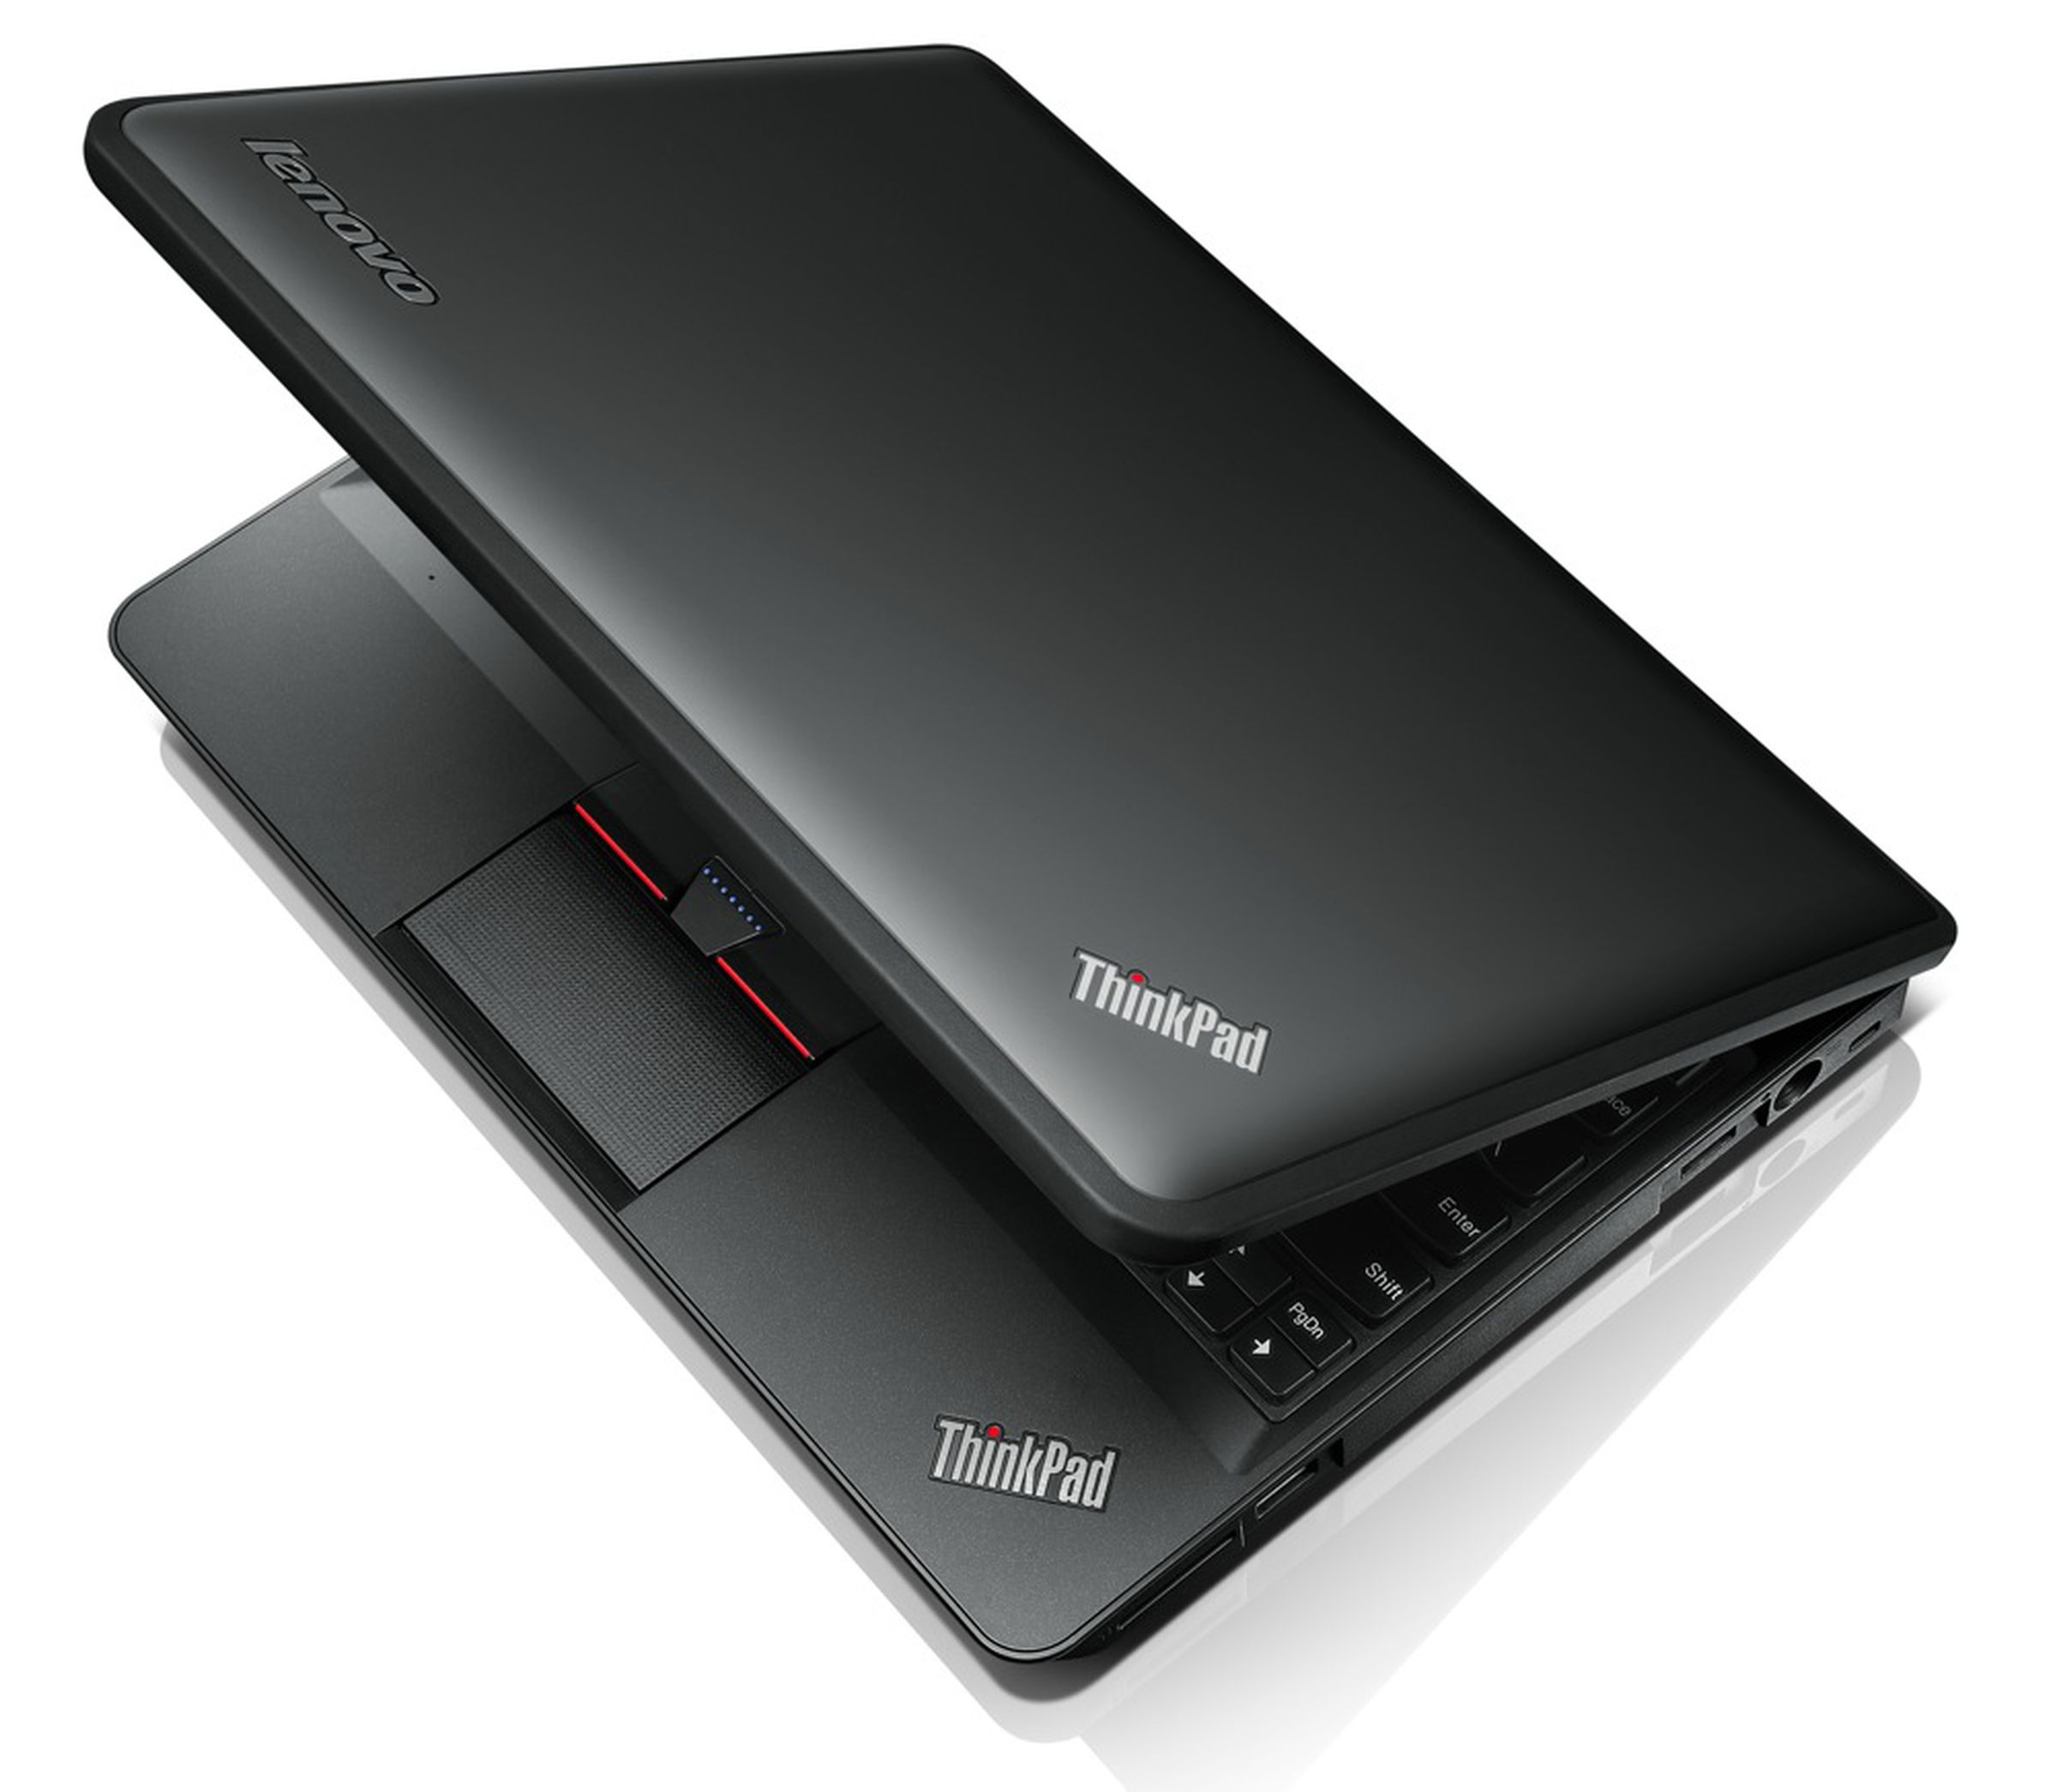 Lenovo ThinkPad X130e press shots 